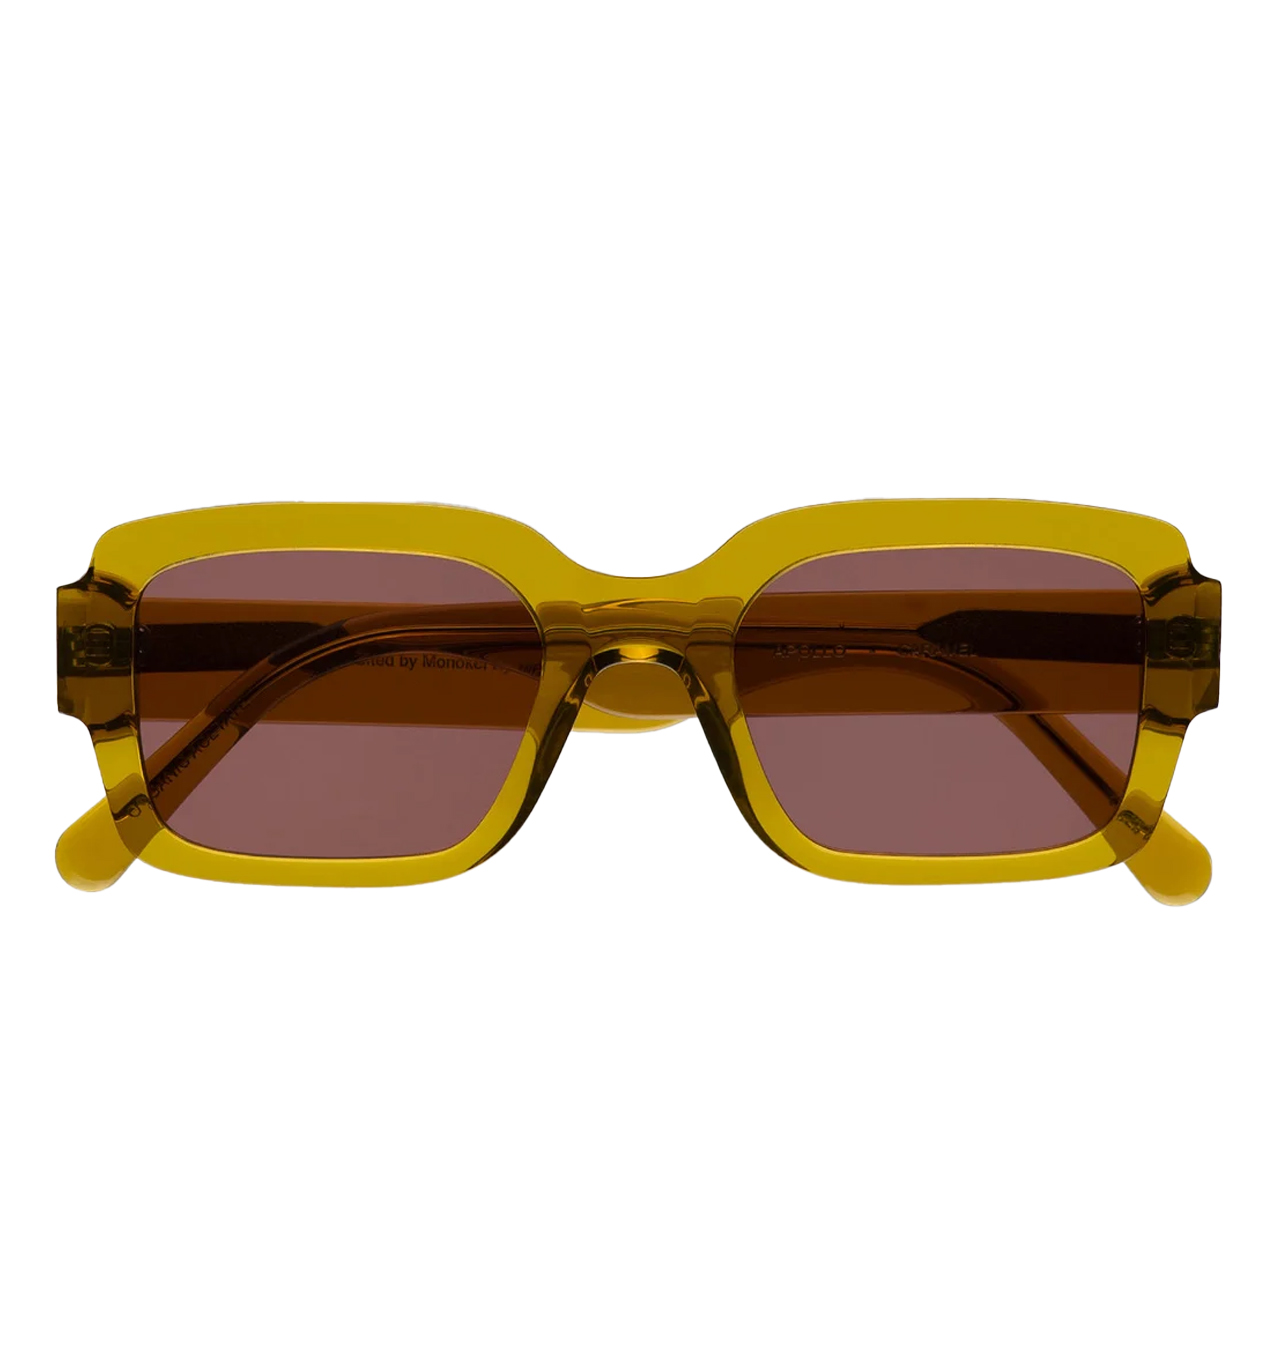 Monokel-Eyewear---Apollo-Caramel-Sunglasses---Pink-Solid-Lens1